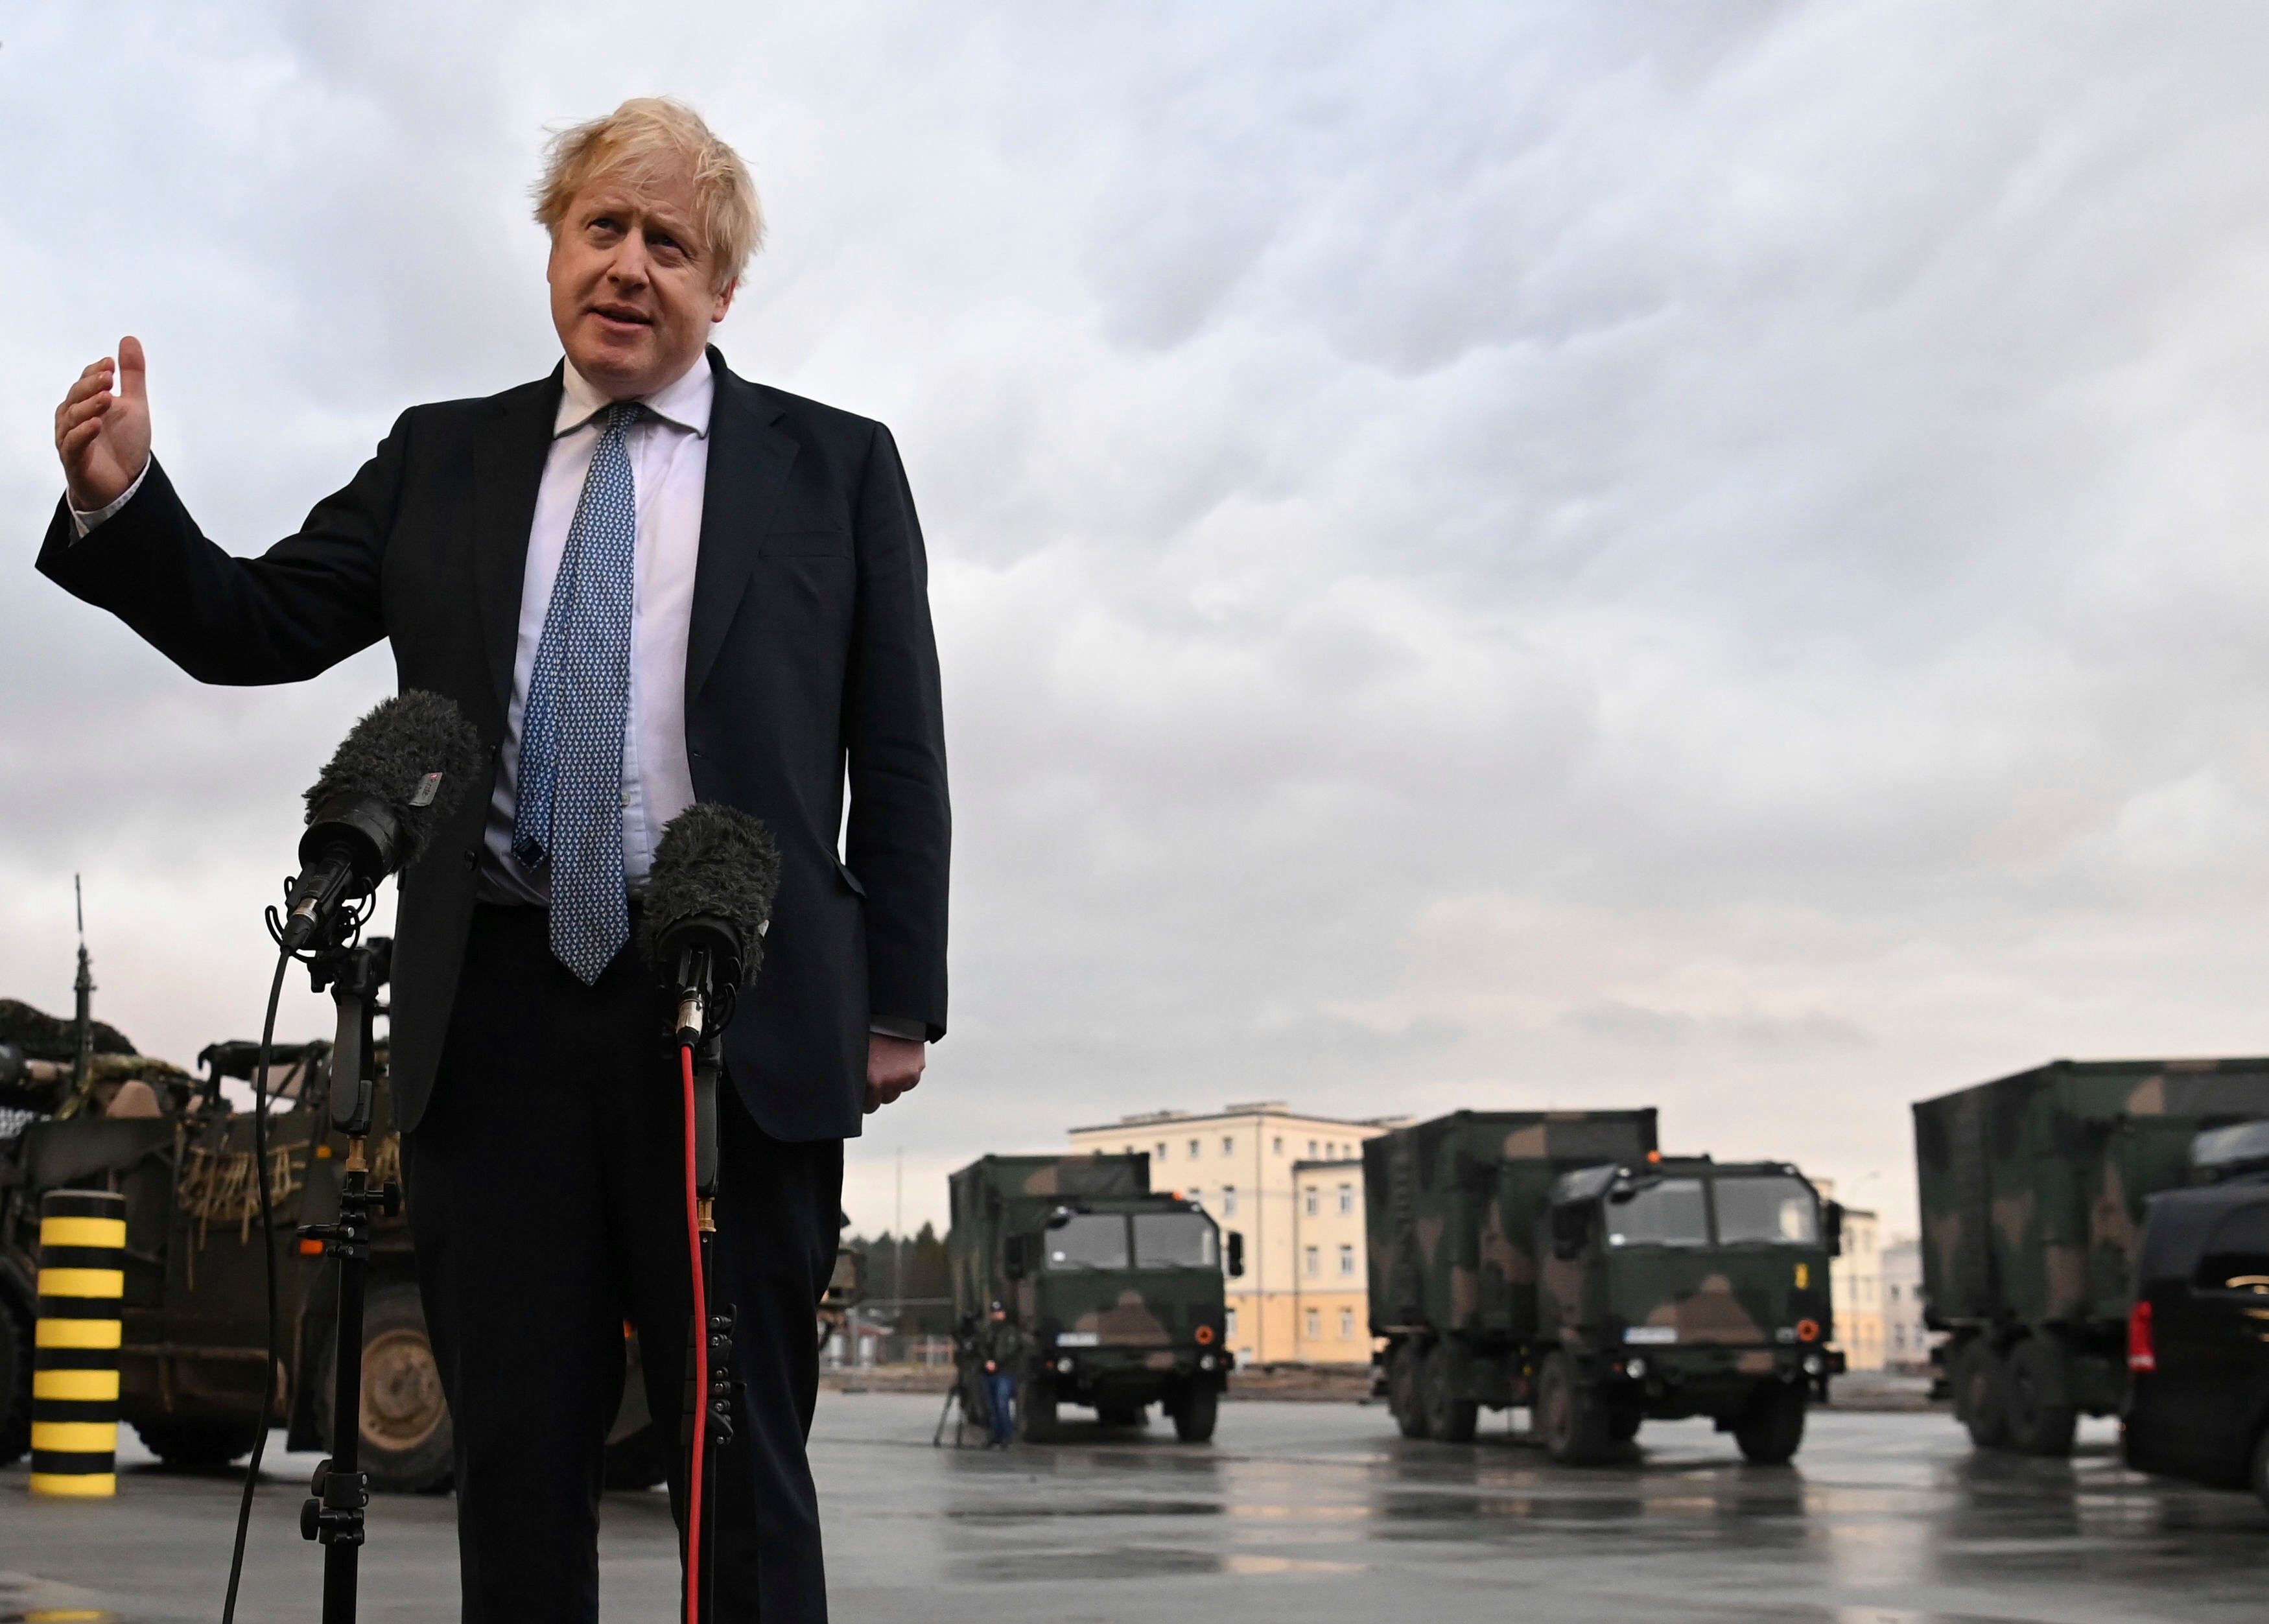 Boris Johnson talks to the media at a military base in Poland last week